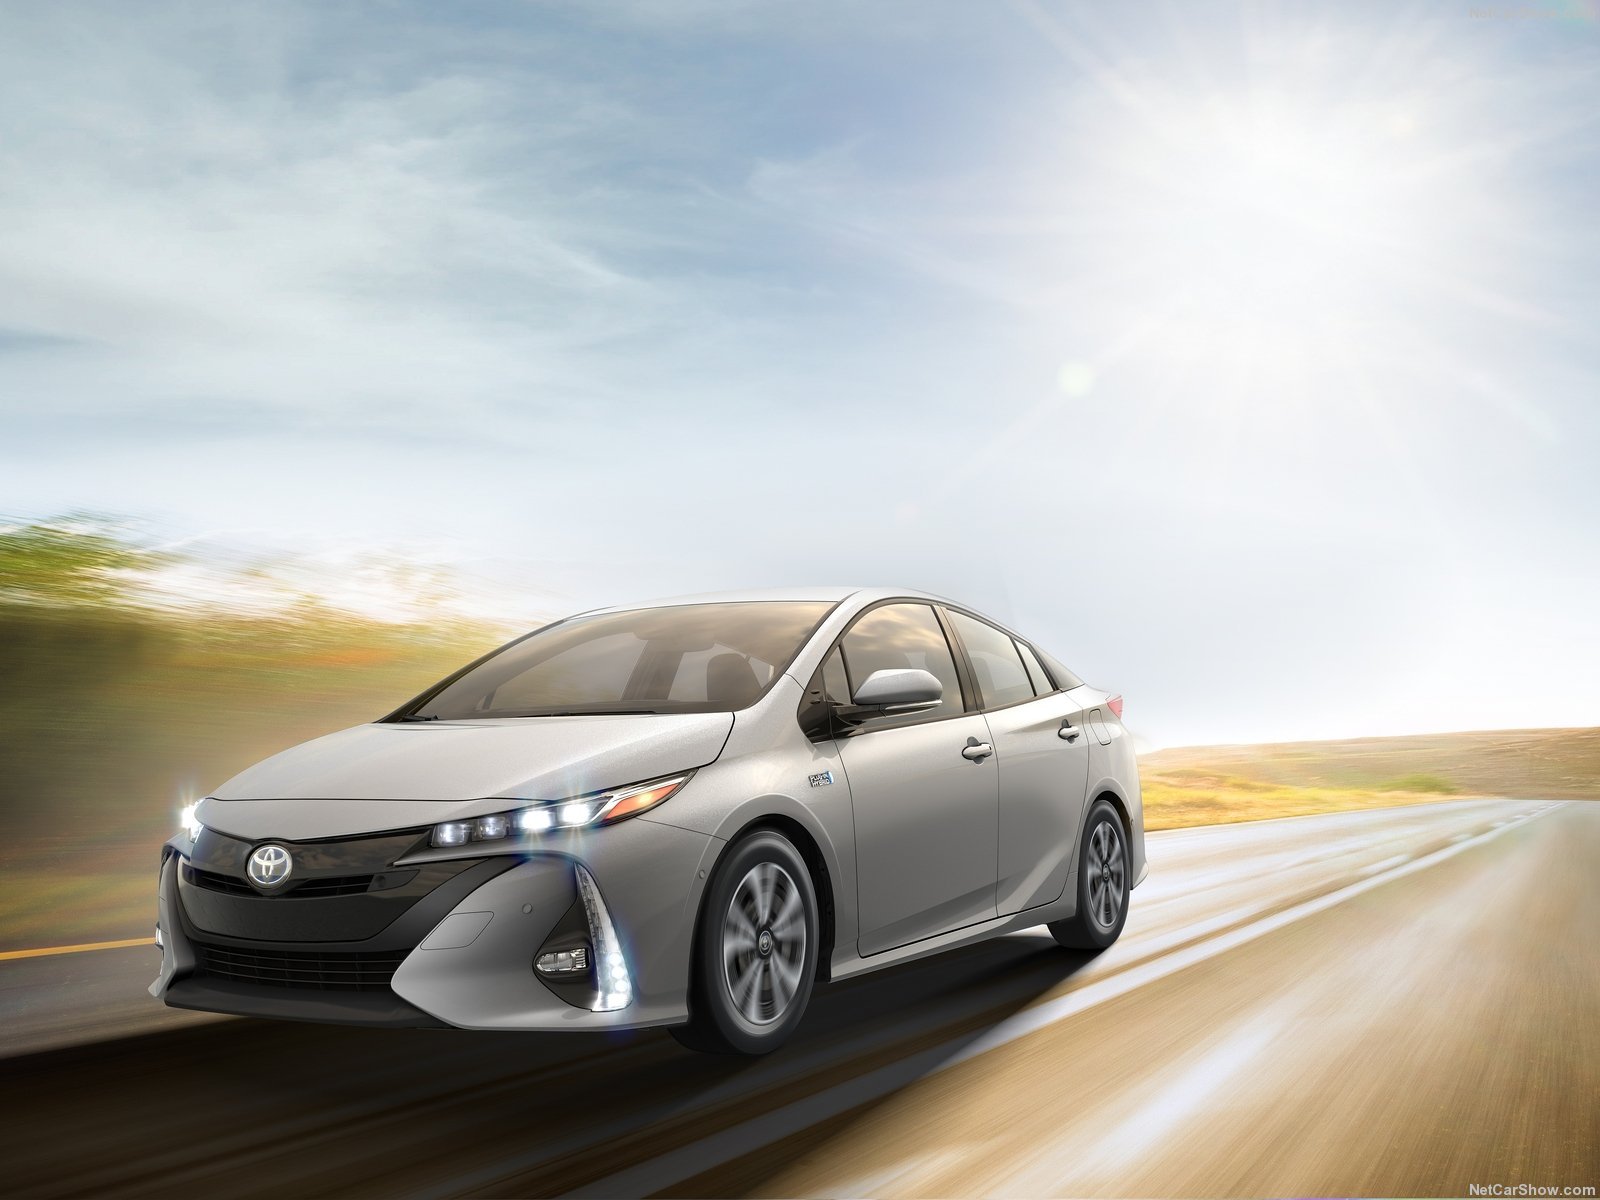 2016, Cars, Hybrid, Plug in, Prime, Prius, Toyota Wallpaper